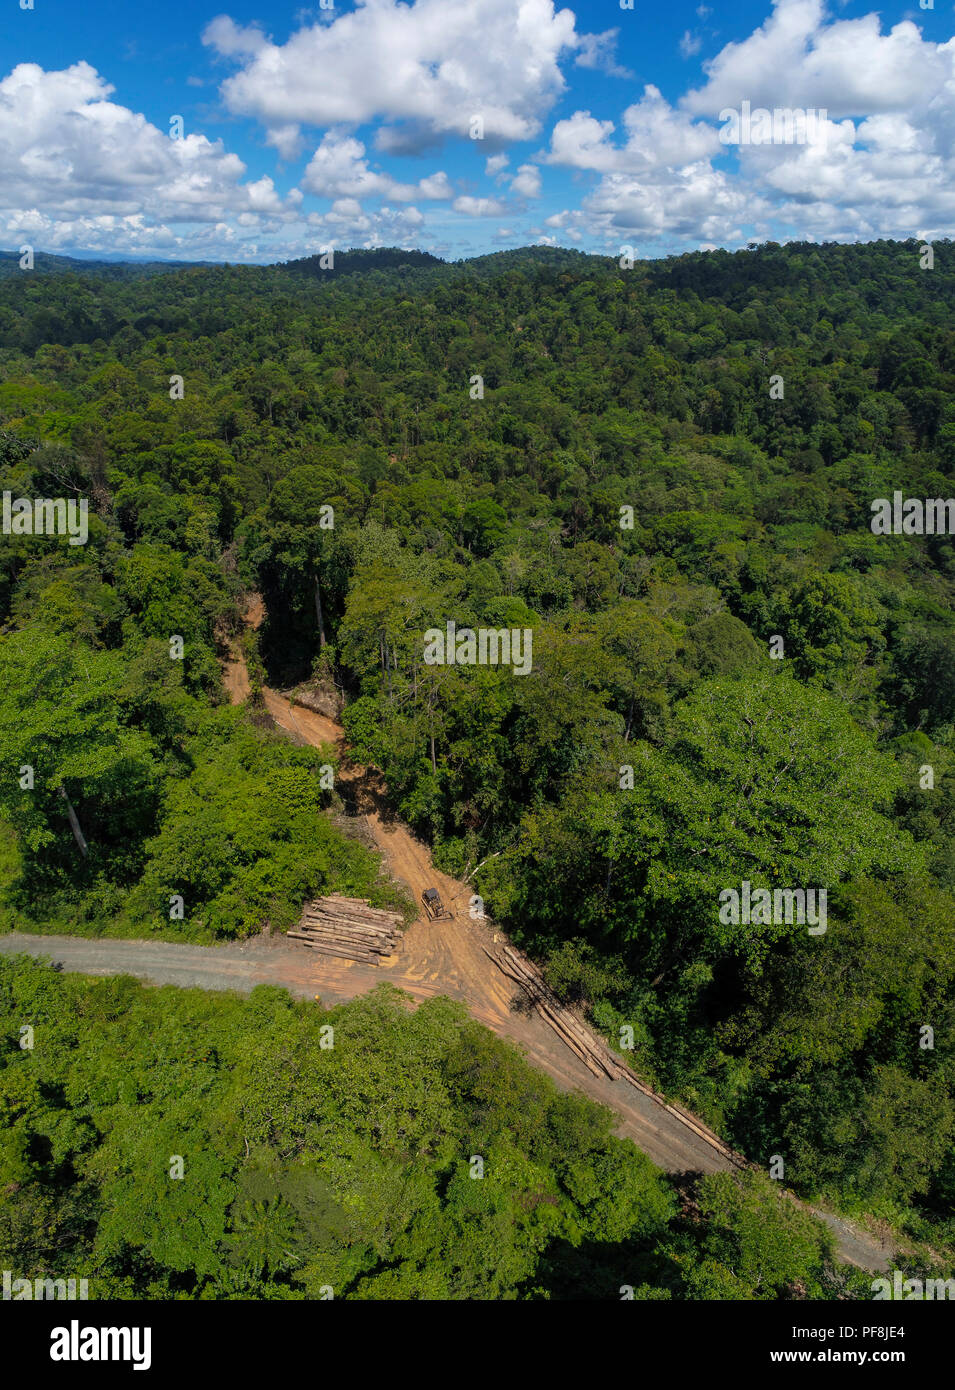 A commercial logging road & timber through Deramakot Forest Reserve, Sabah, Malaysian Borneo Stock Photo